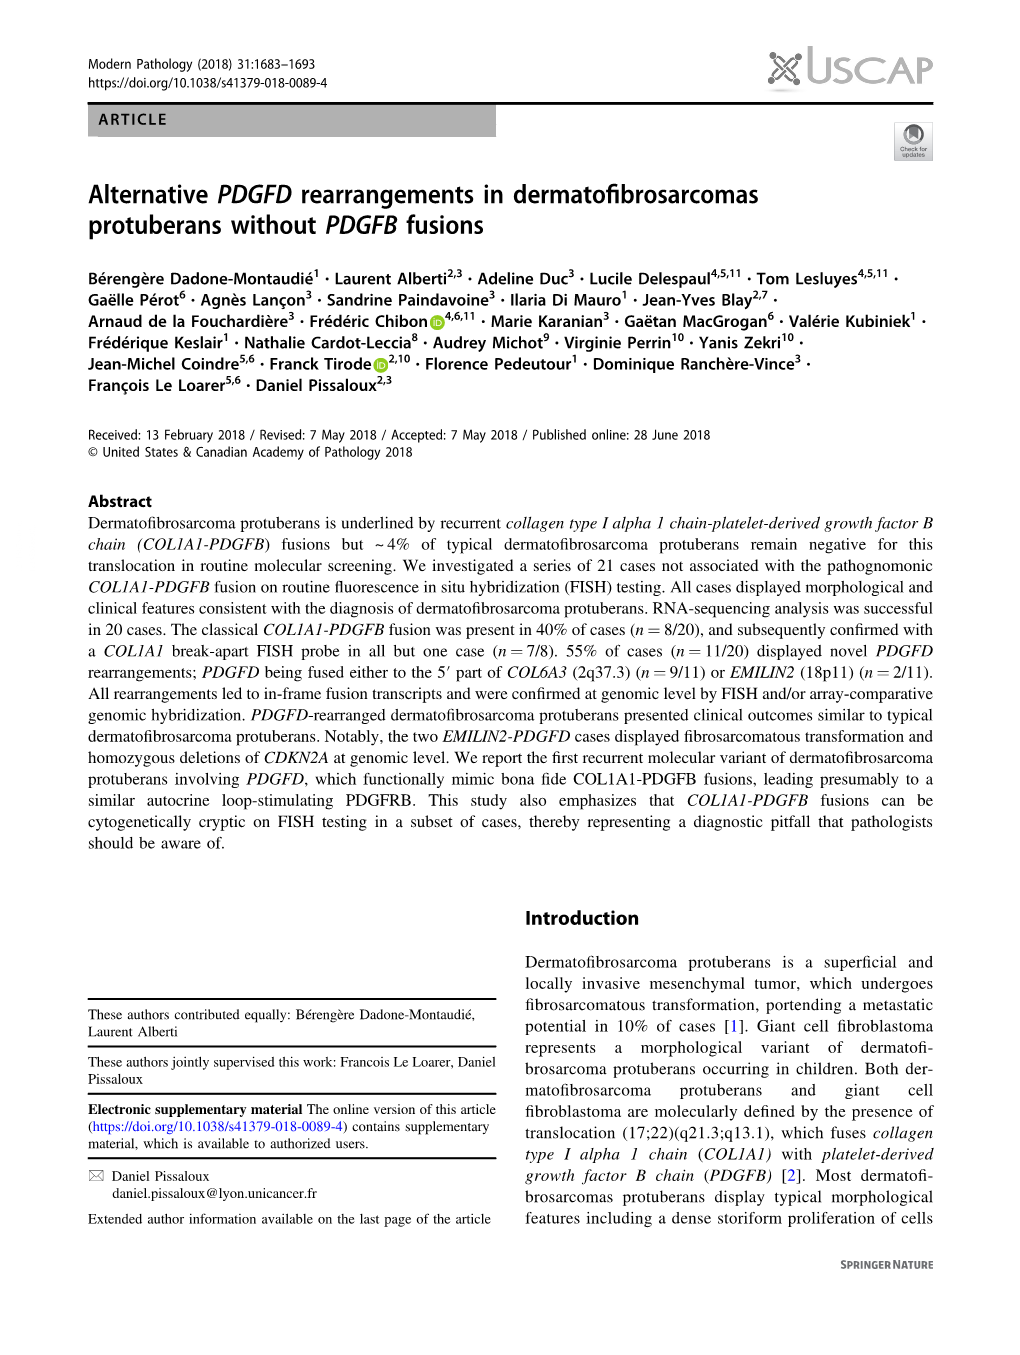 Alternative PDGFD Rearrangements in Dermatofibrosarcomas Protuberans